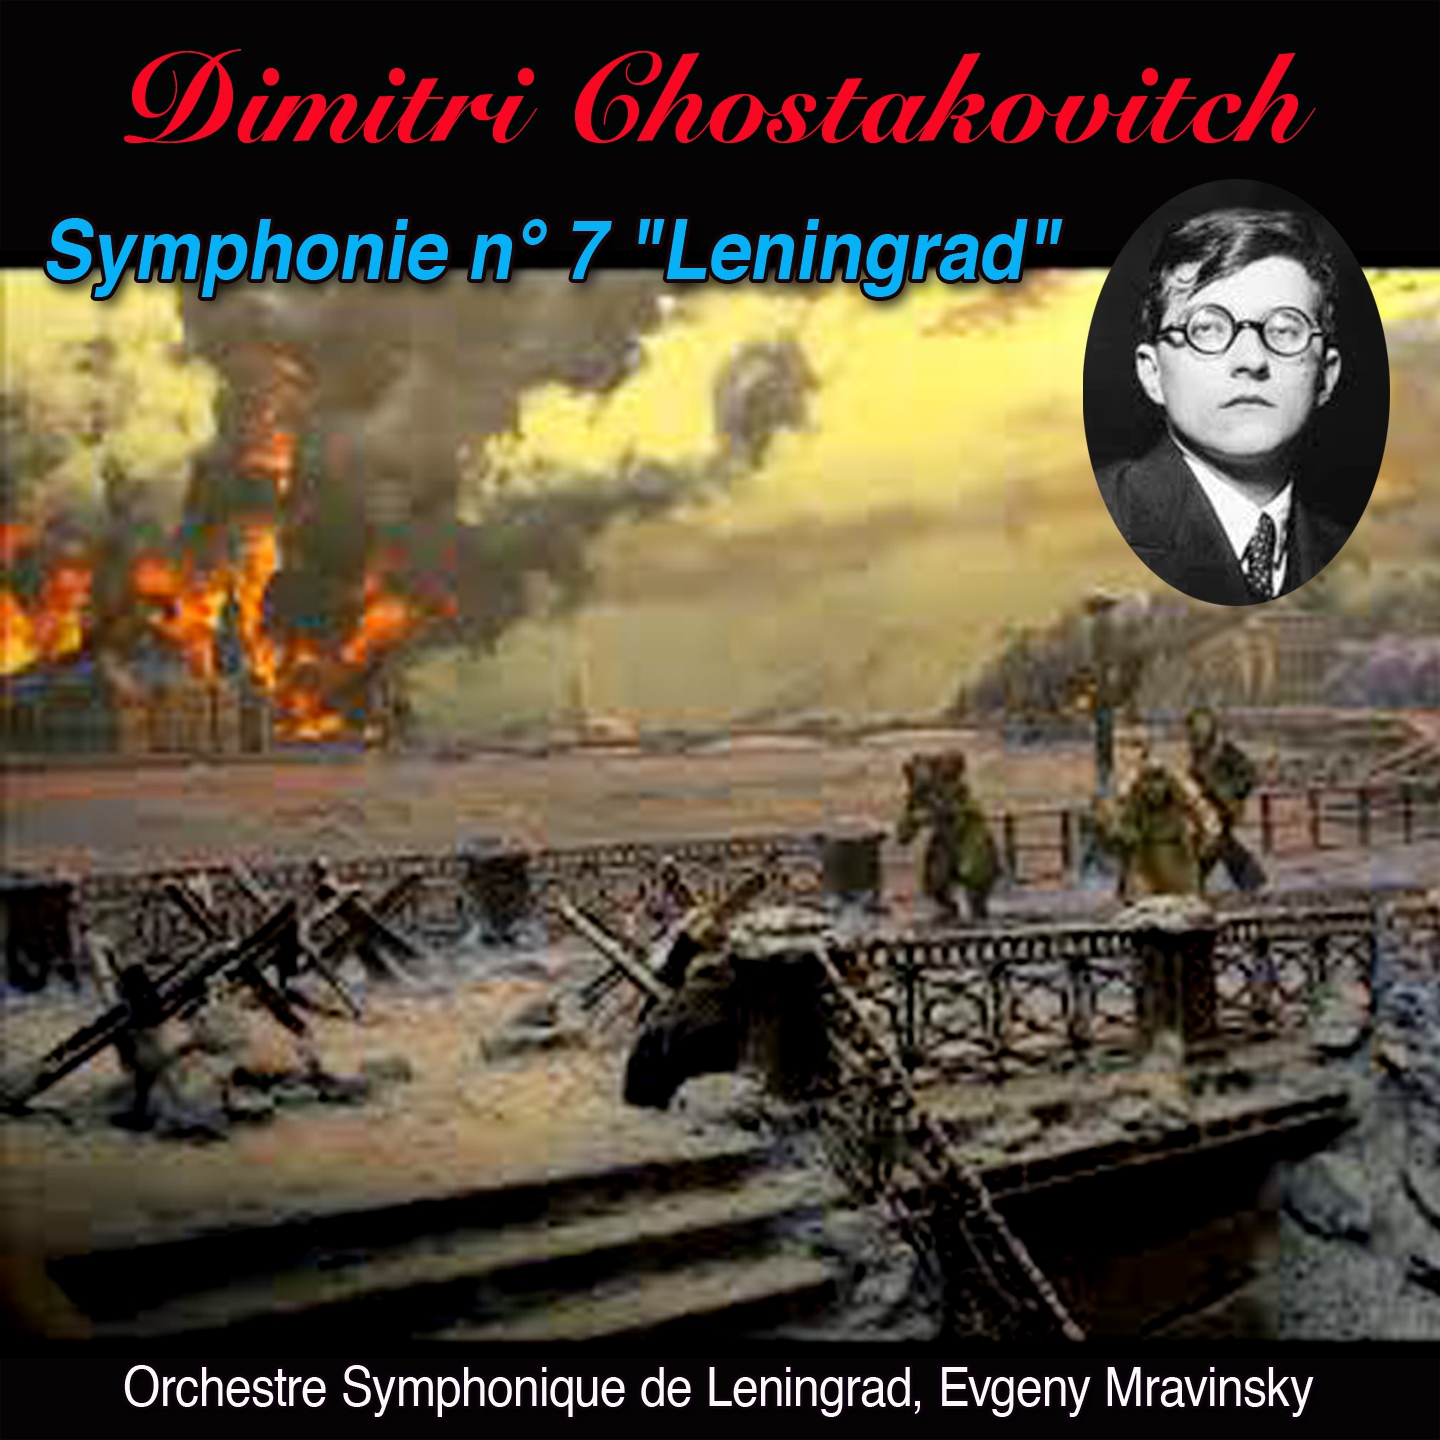 Dimitri chostakovitch, symphonie n 7 " Leningrad"